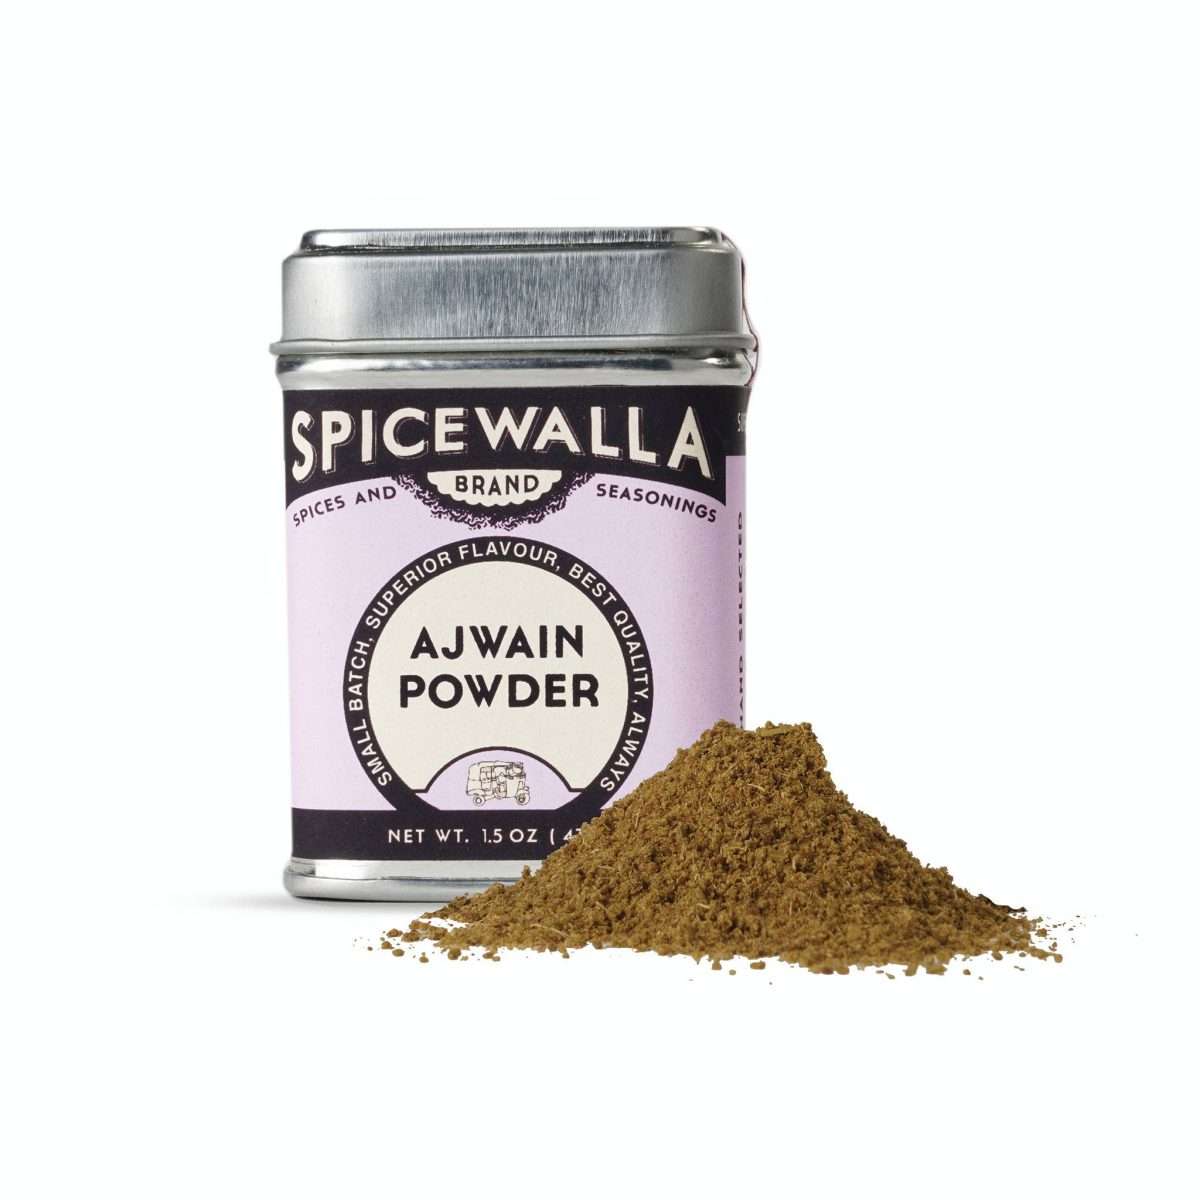 Spicewalla Ajwain powder in a small tin.